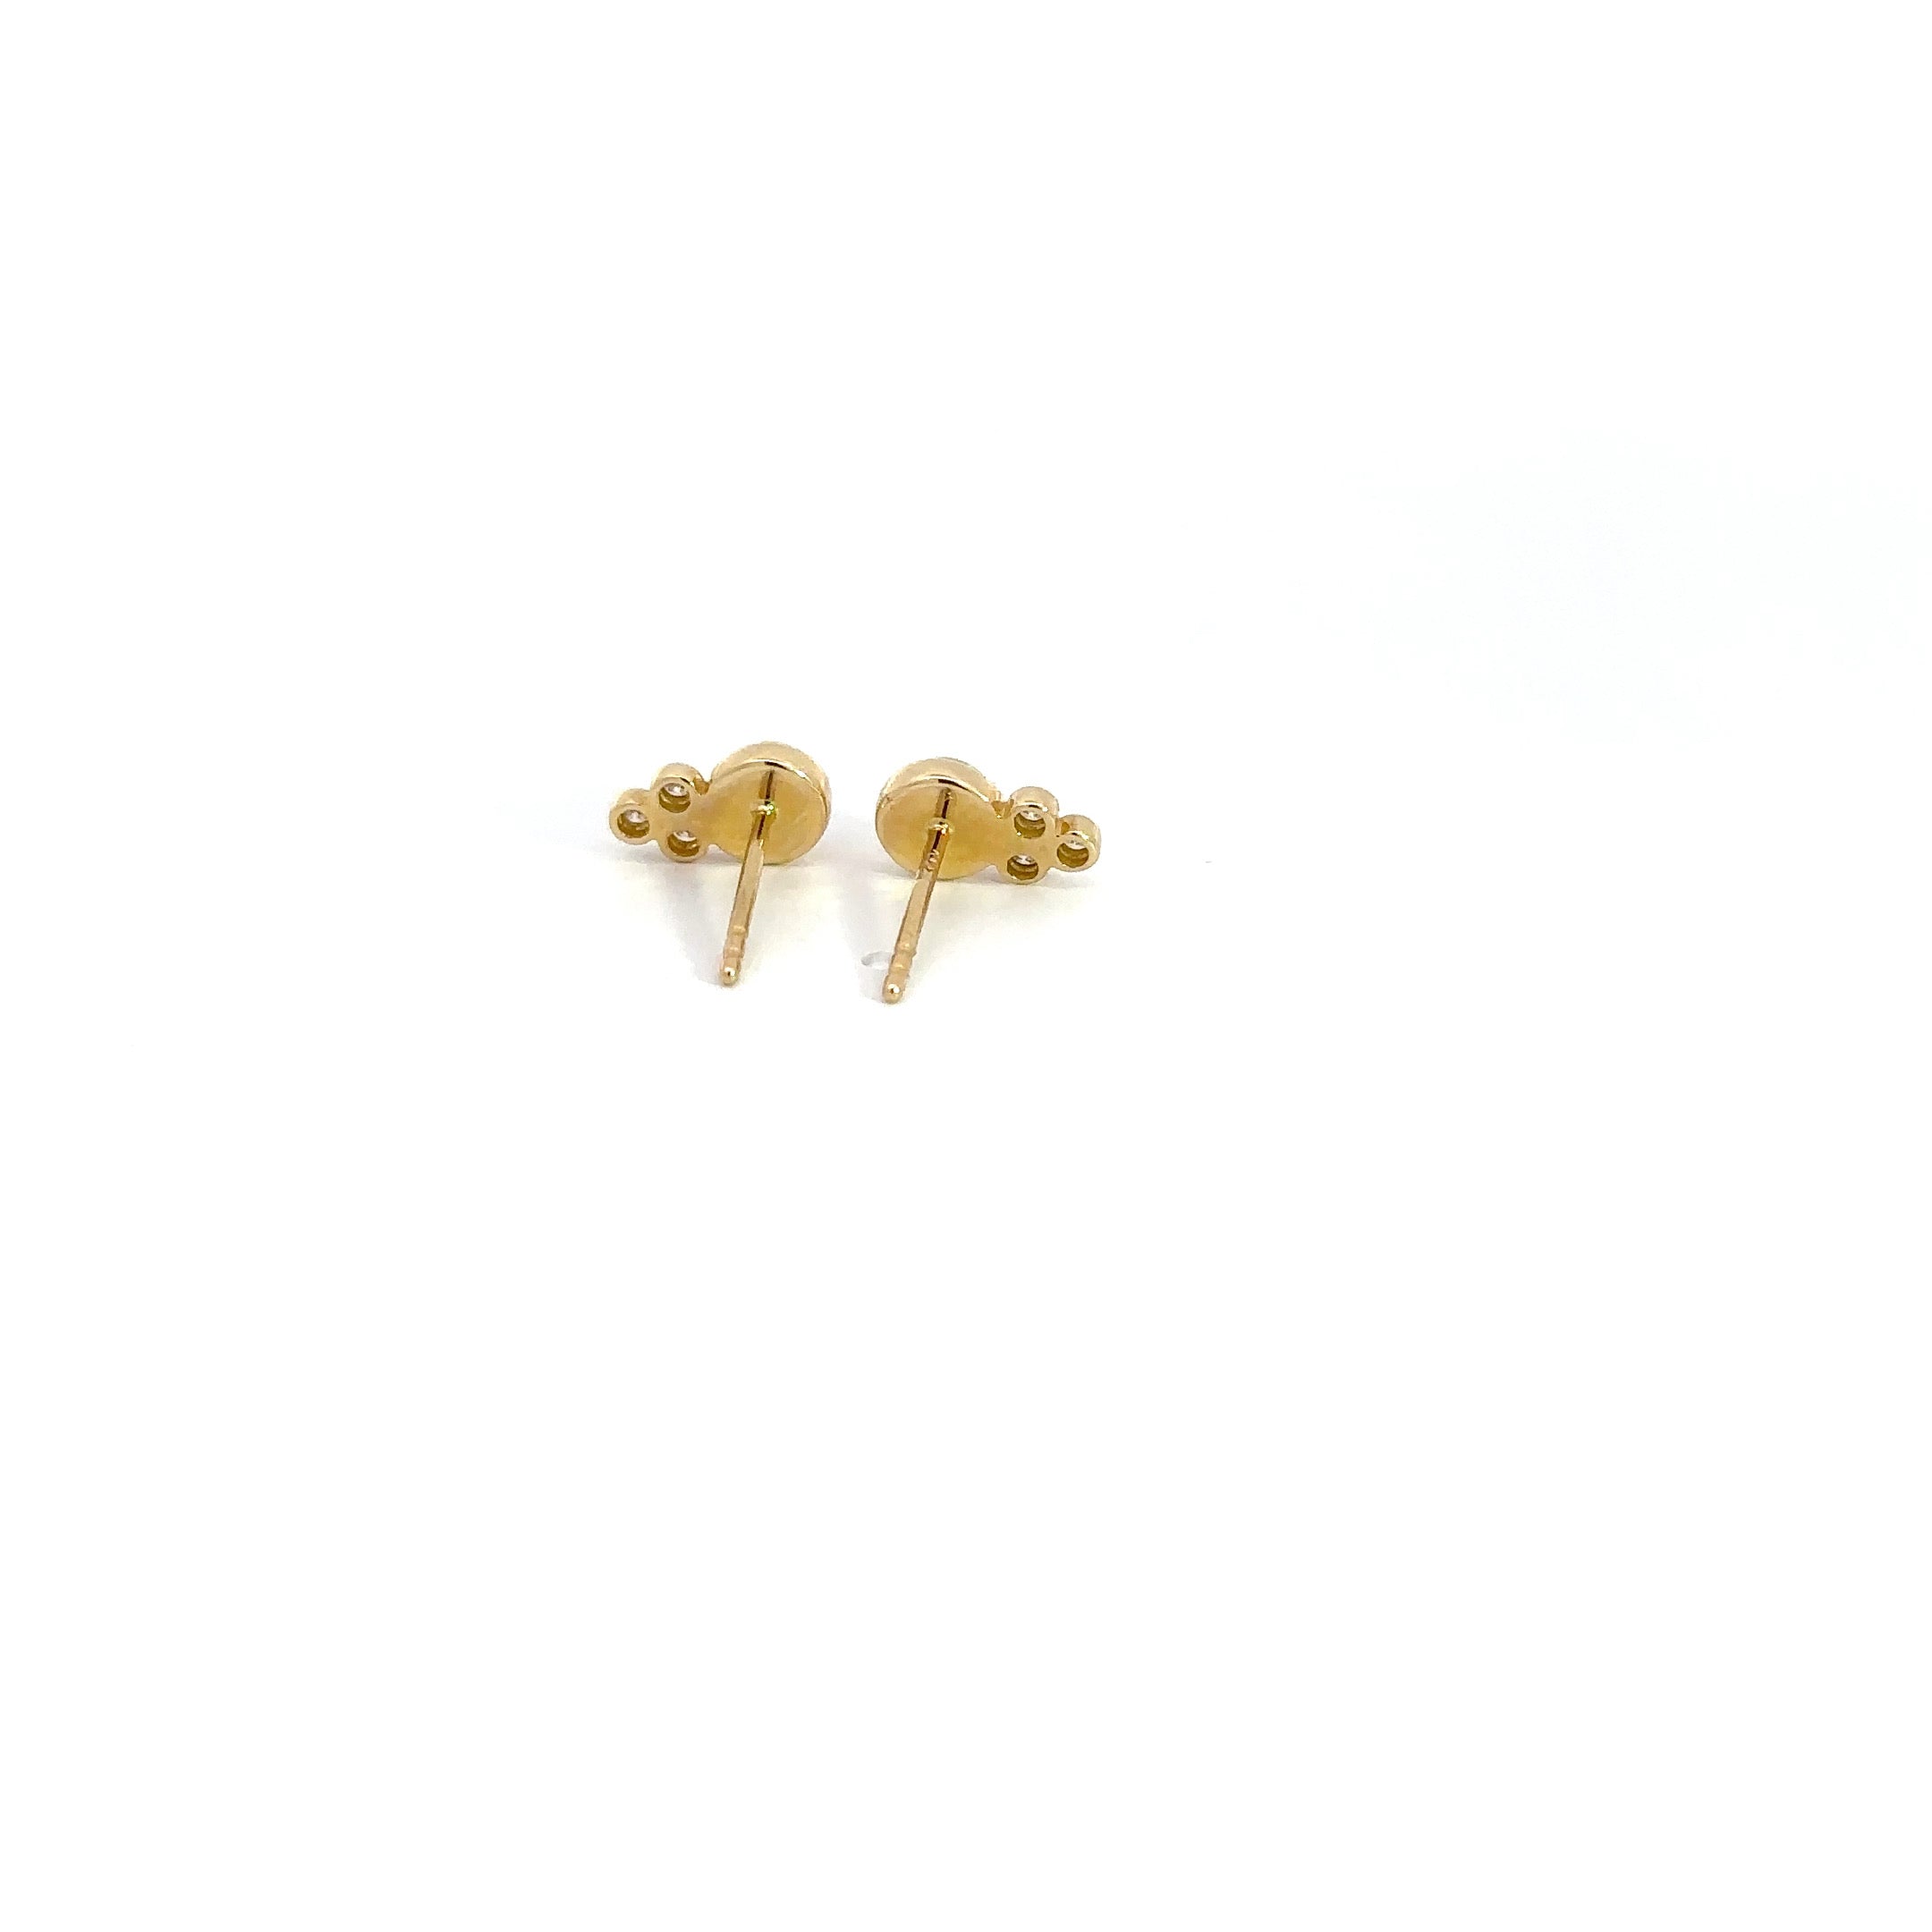 WD974 14kt gold Opal and Diamond stud earrings